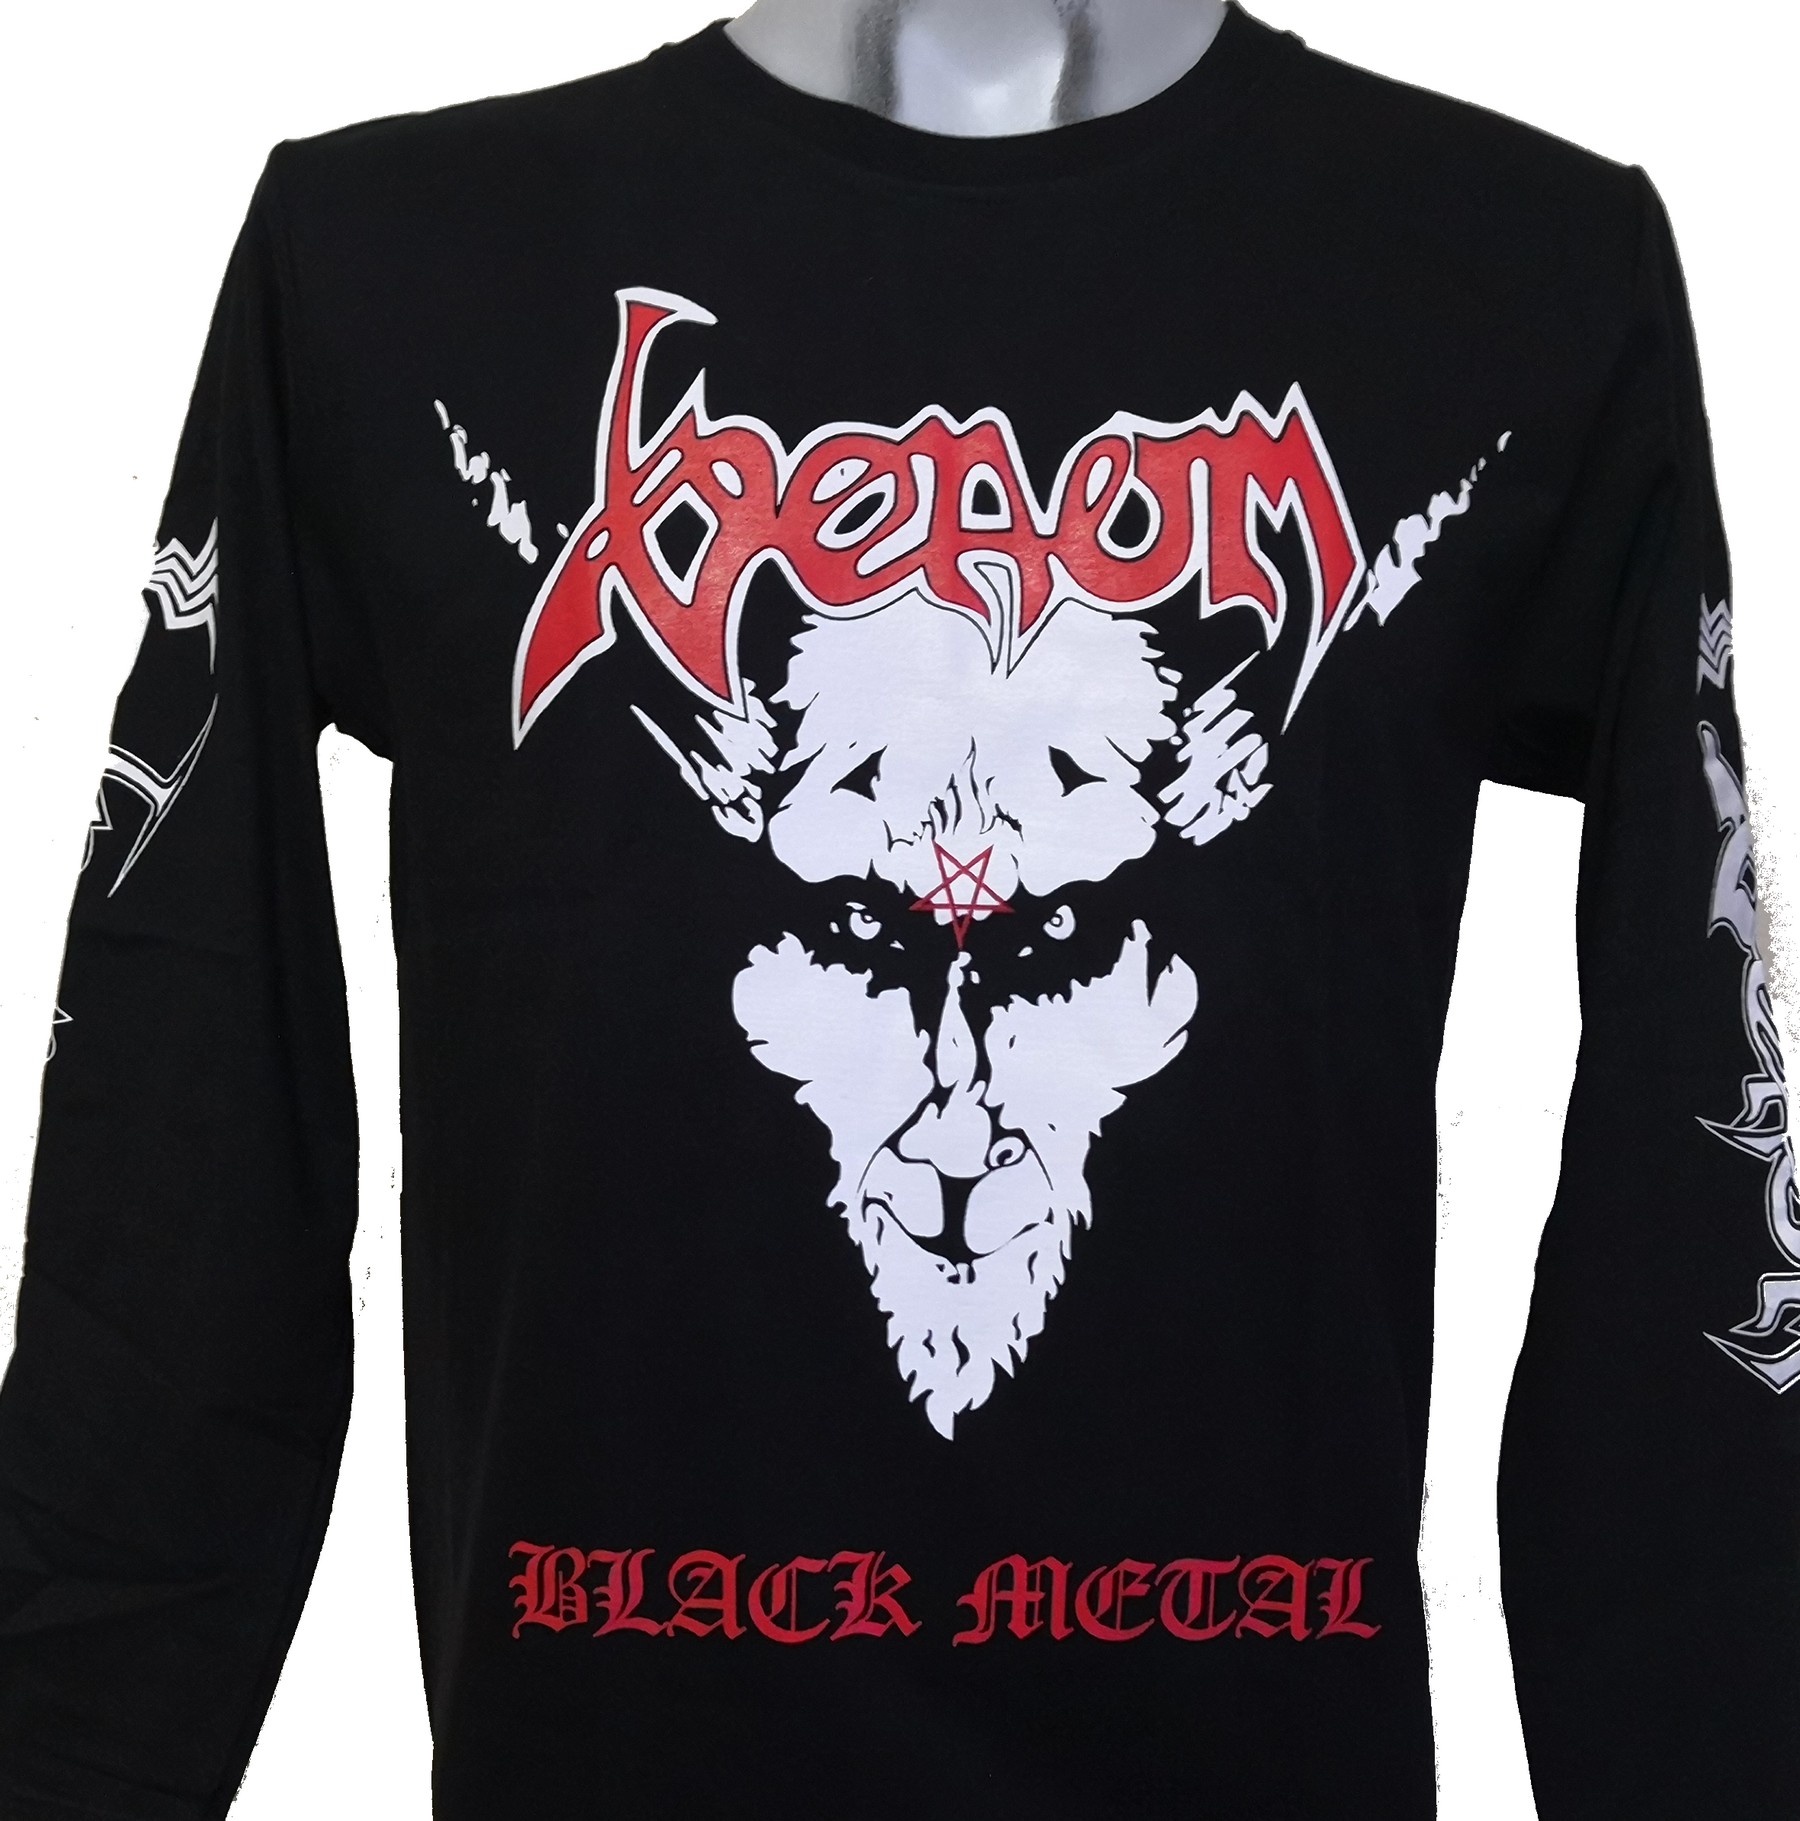 Venom /'Black Metal/' Long Sleeve Shirt ? NEW /& OFFICIAL!